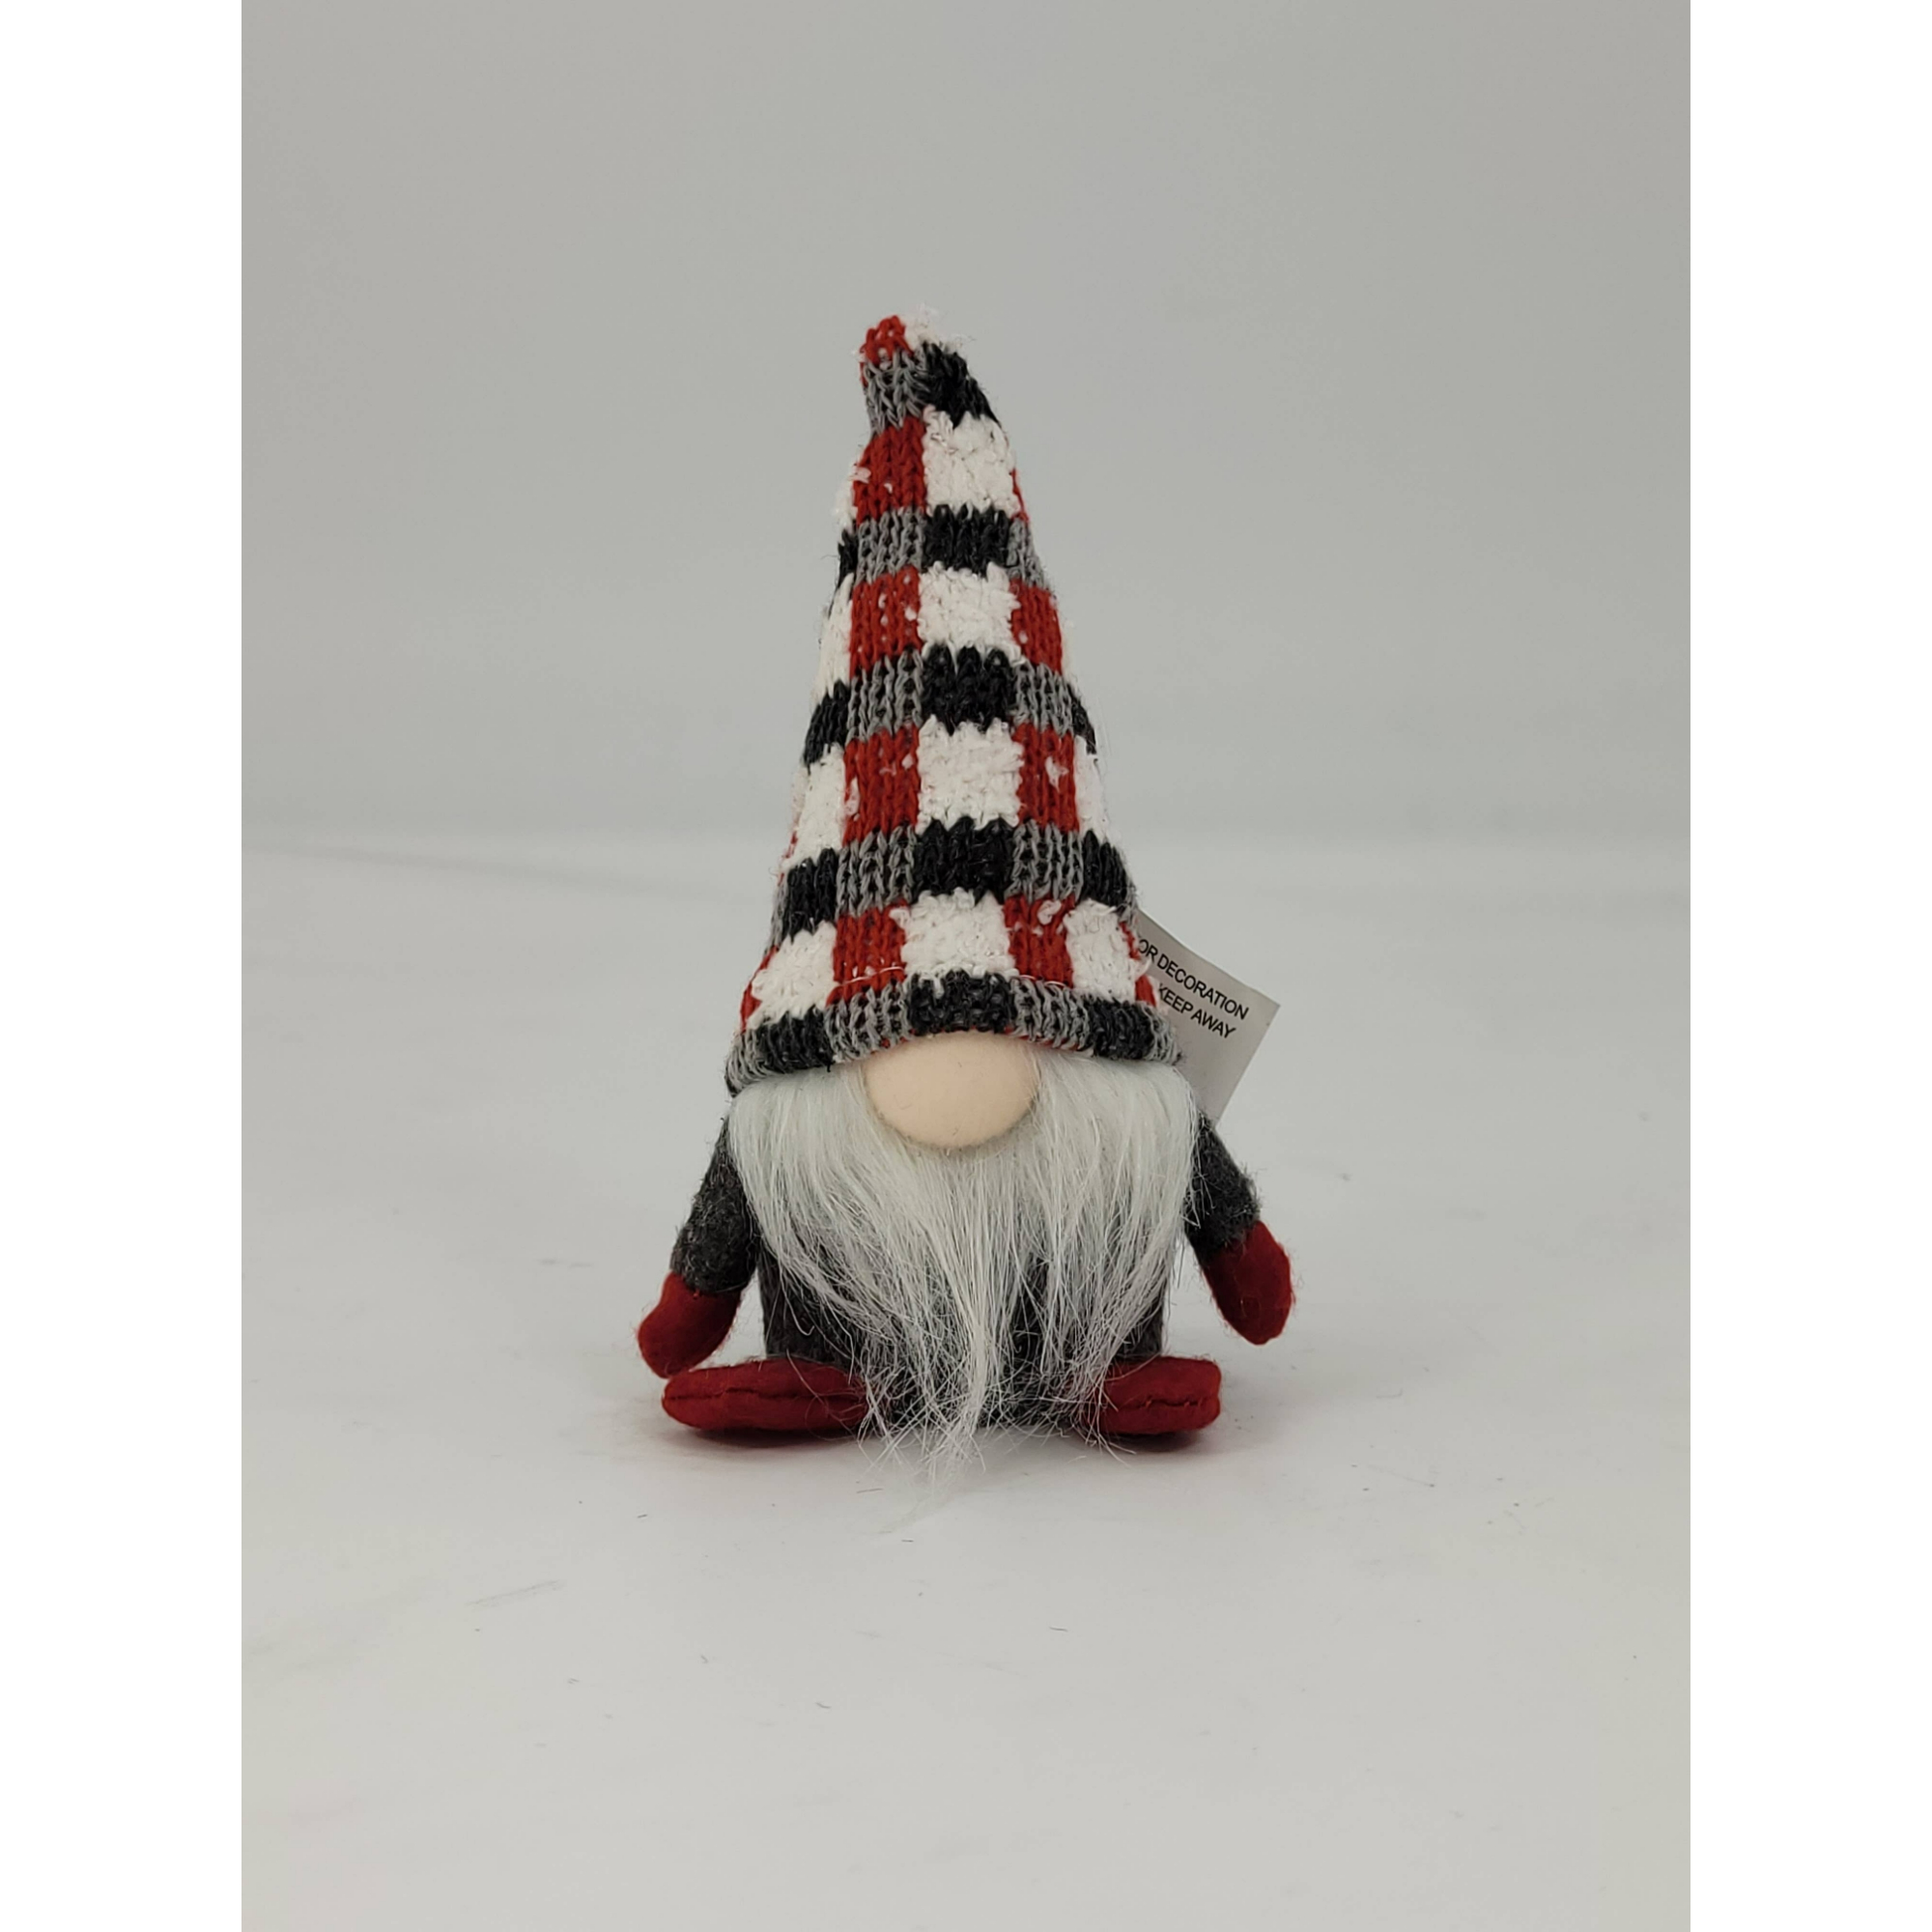 Galt International Plaid Hat Christmas Gnome Figurine - 5" - Red and Gray